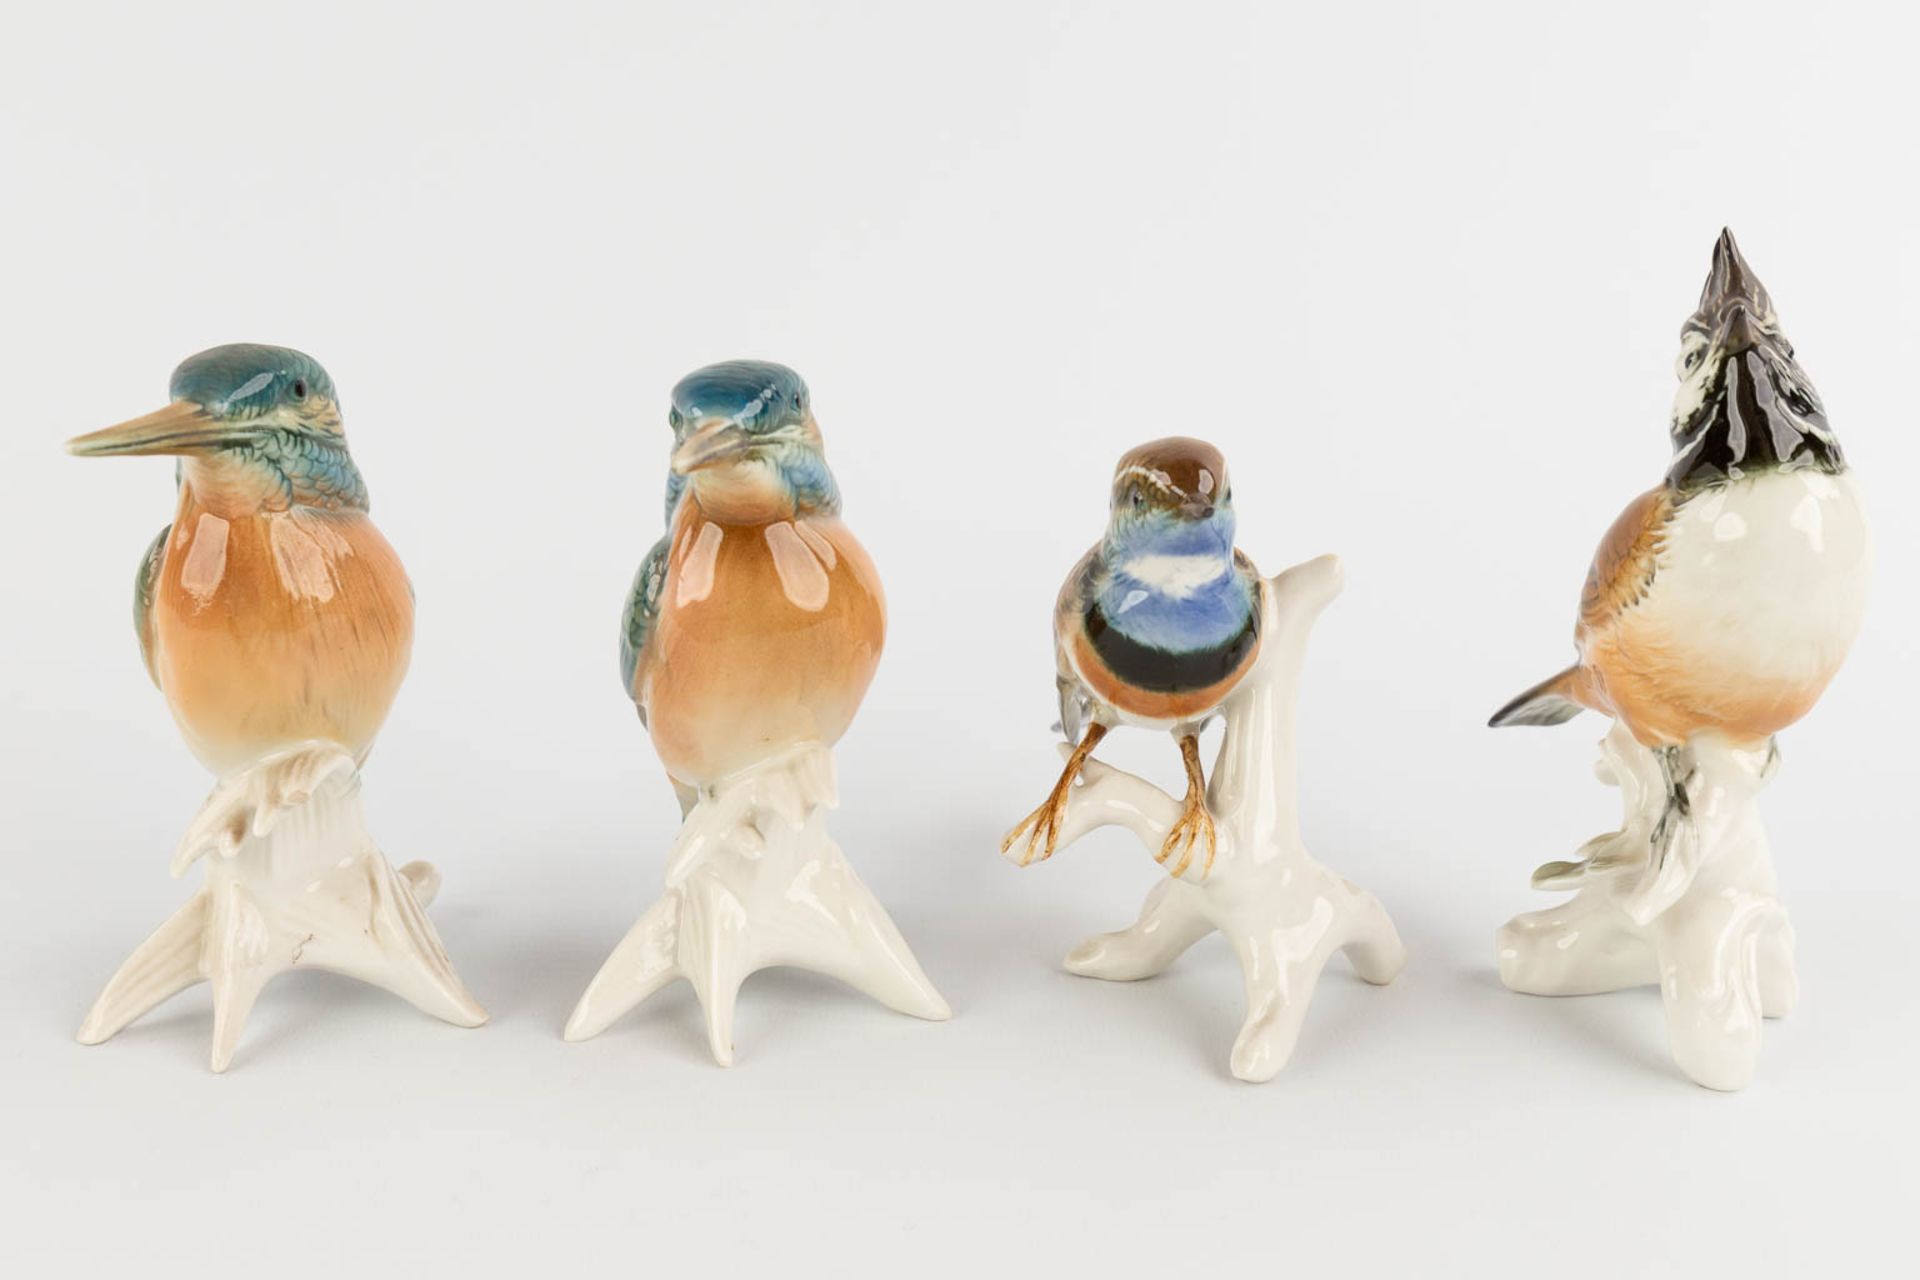 Karl ENS Porzellan, 8 birds, polychrome porcelain. 20th C. (H:19 cm) - Image 13 of 15